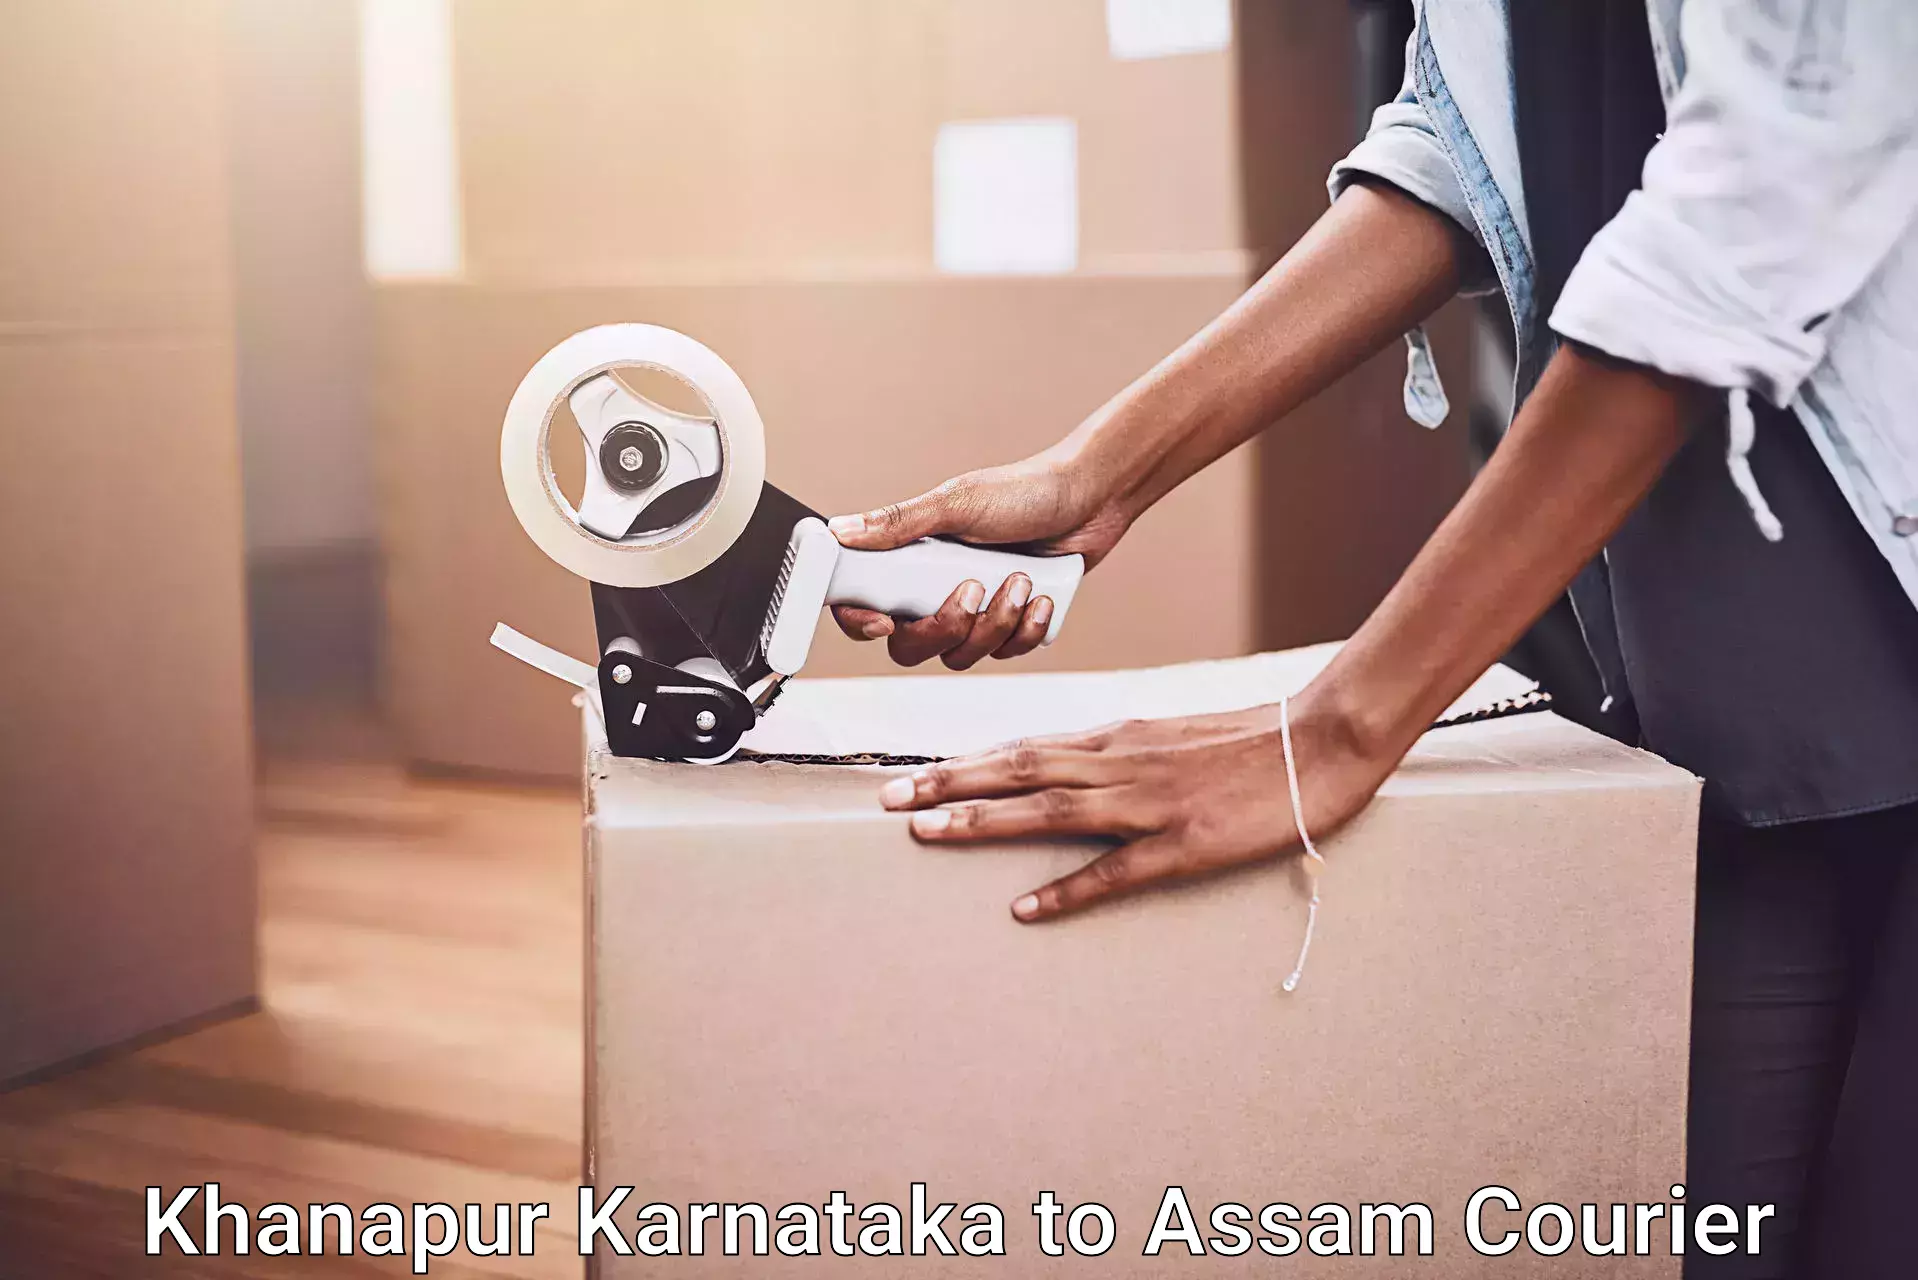 Furniture moving assistance Khanapur Karnataka to Guwahati University